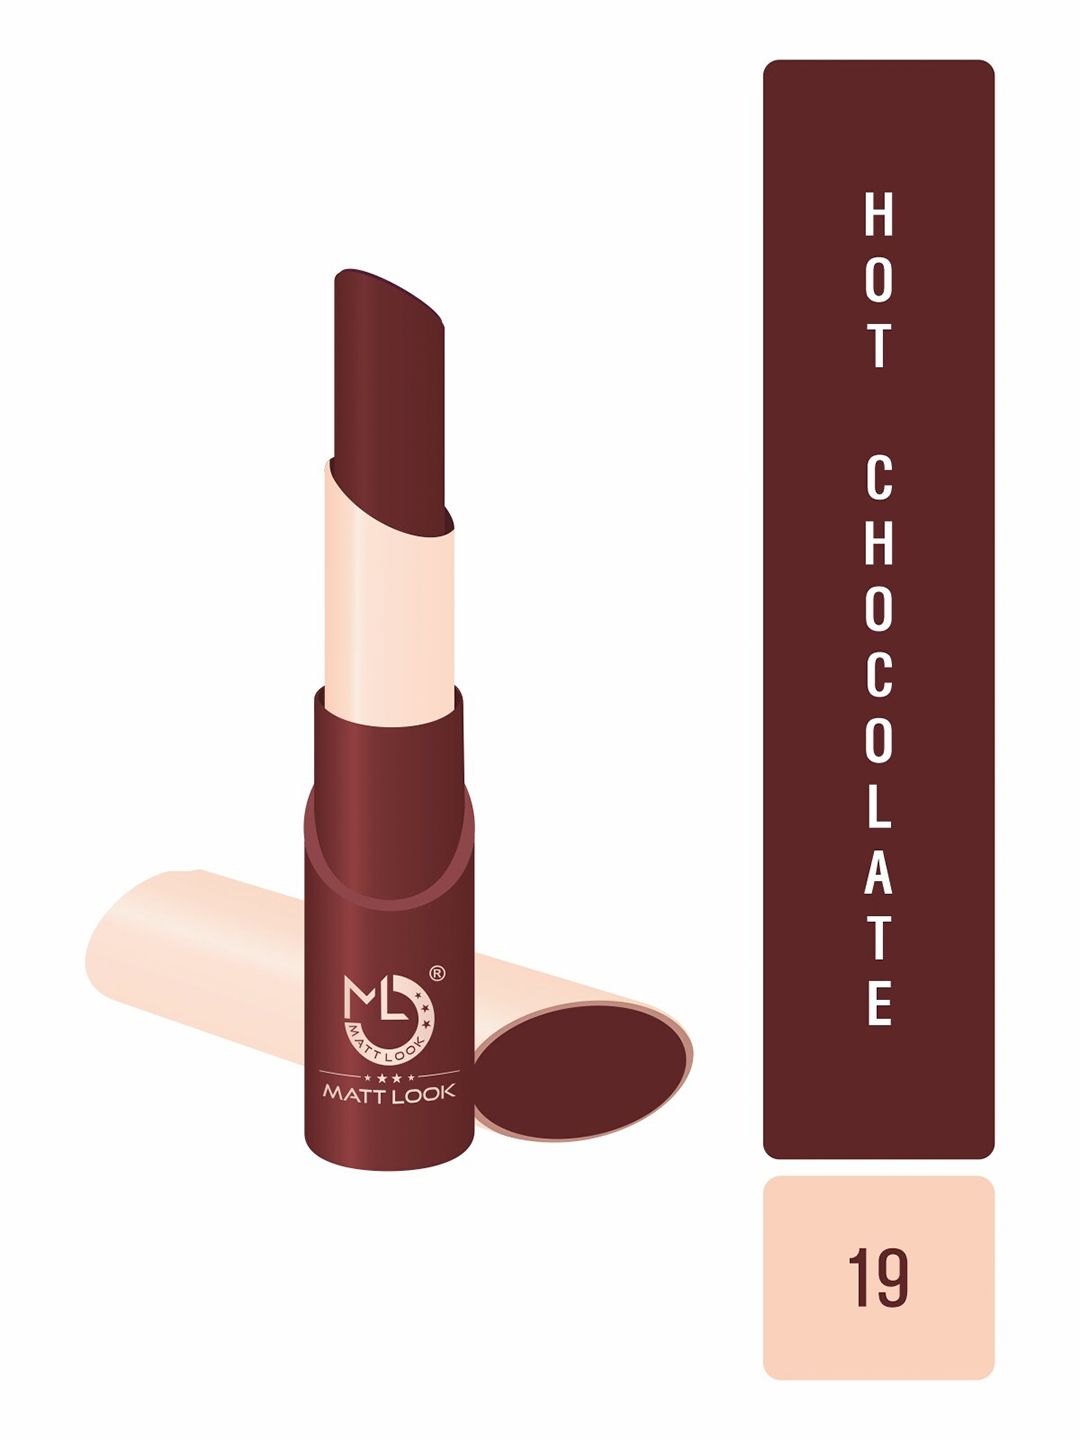 MATTLOOK Vivid Matte Lipstick - 19 Hot Chocolate Price in India